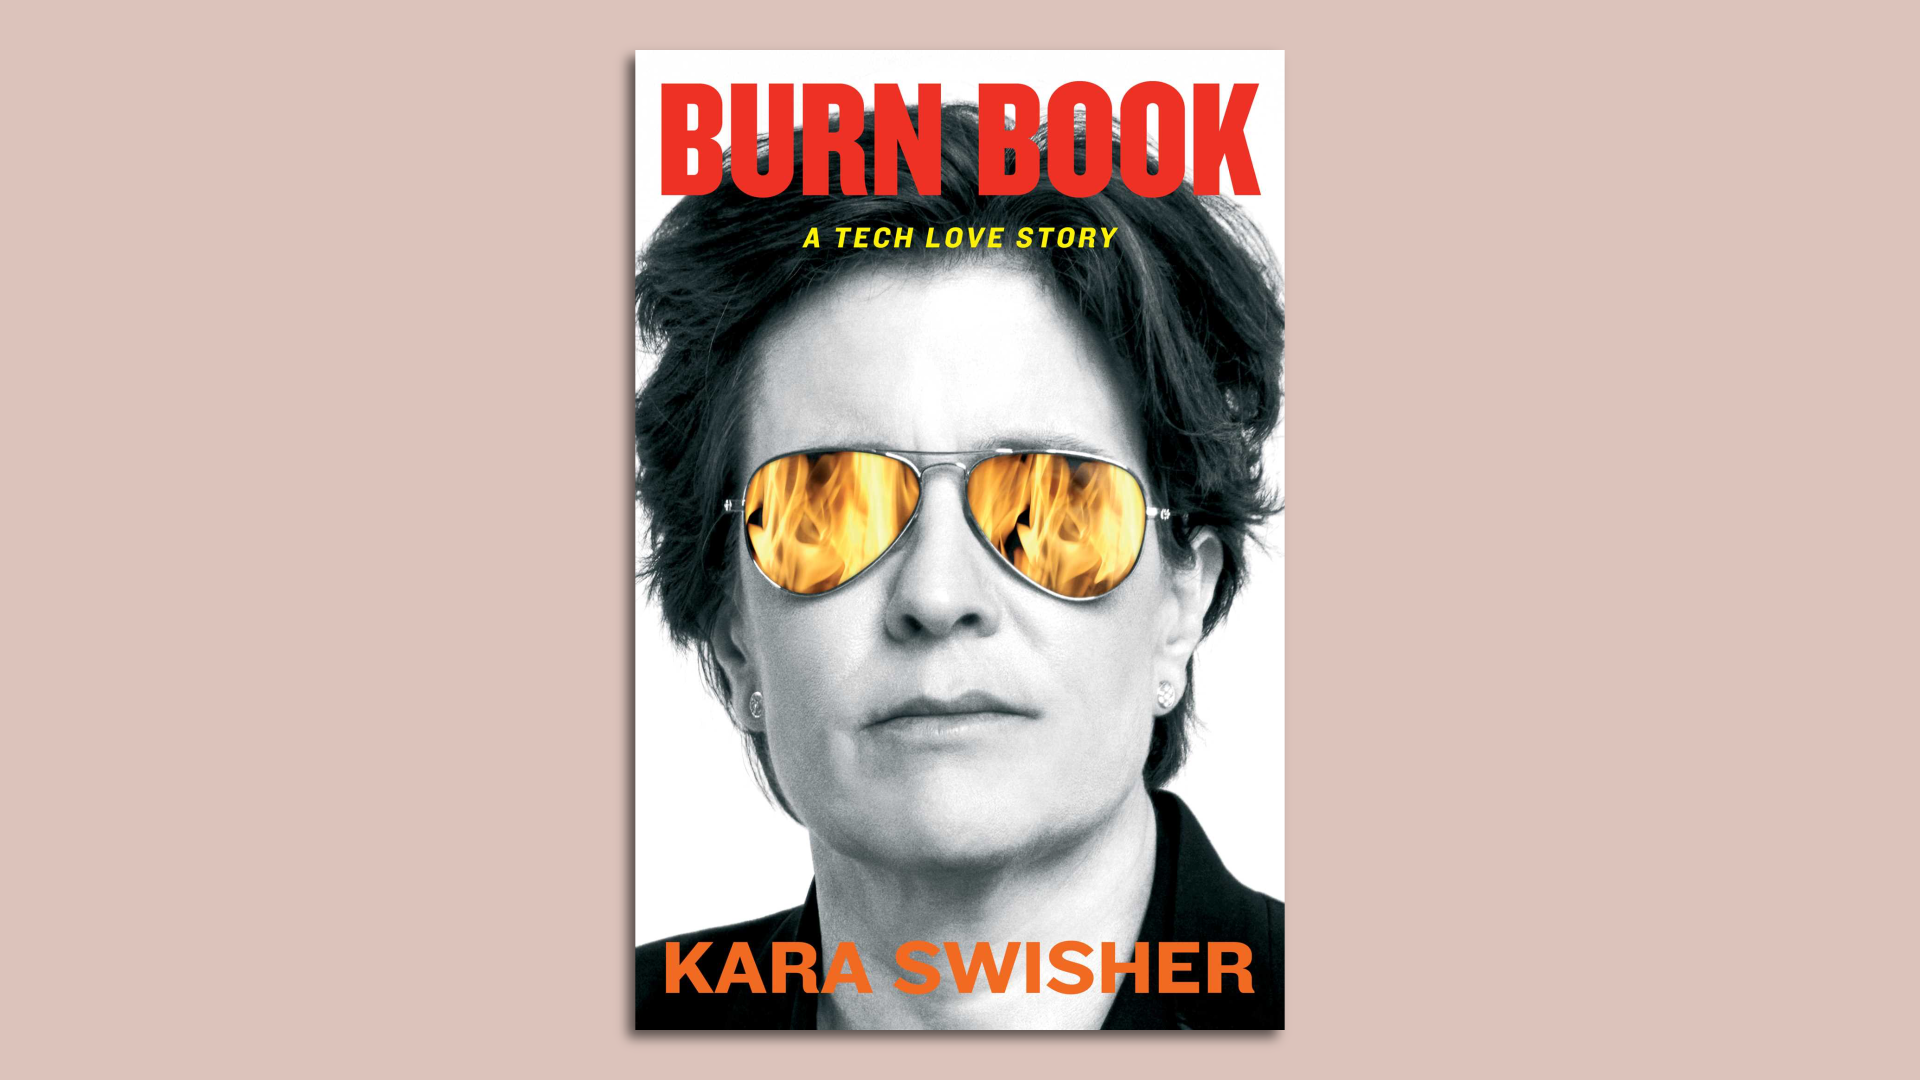 Photo of the cover of Kara Swisher's book "Burn Book"